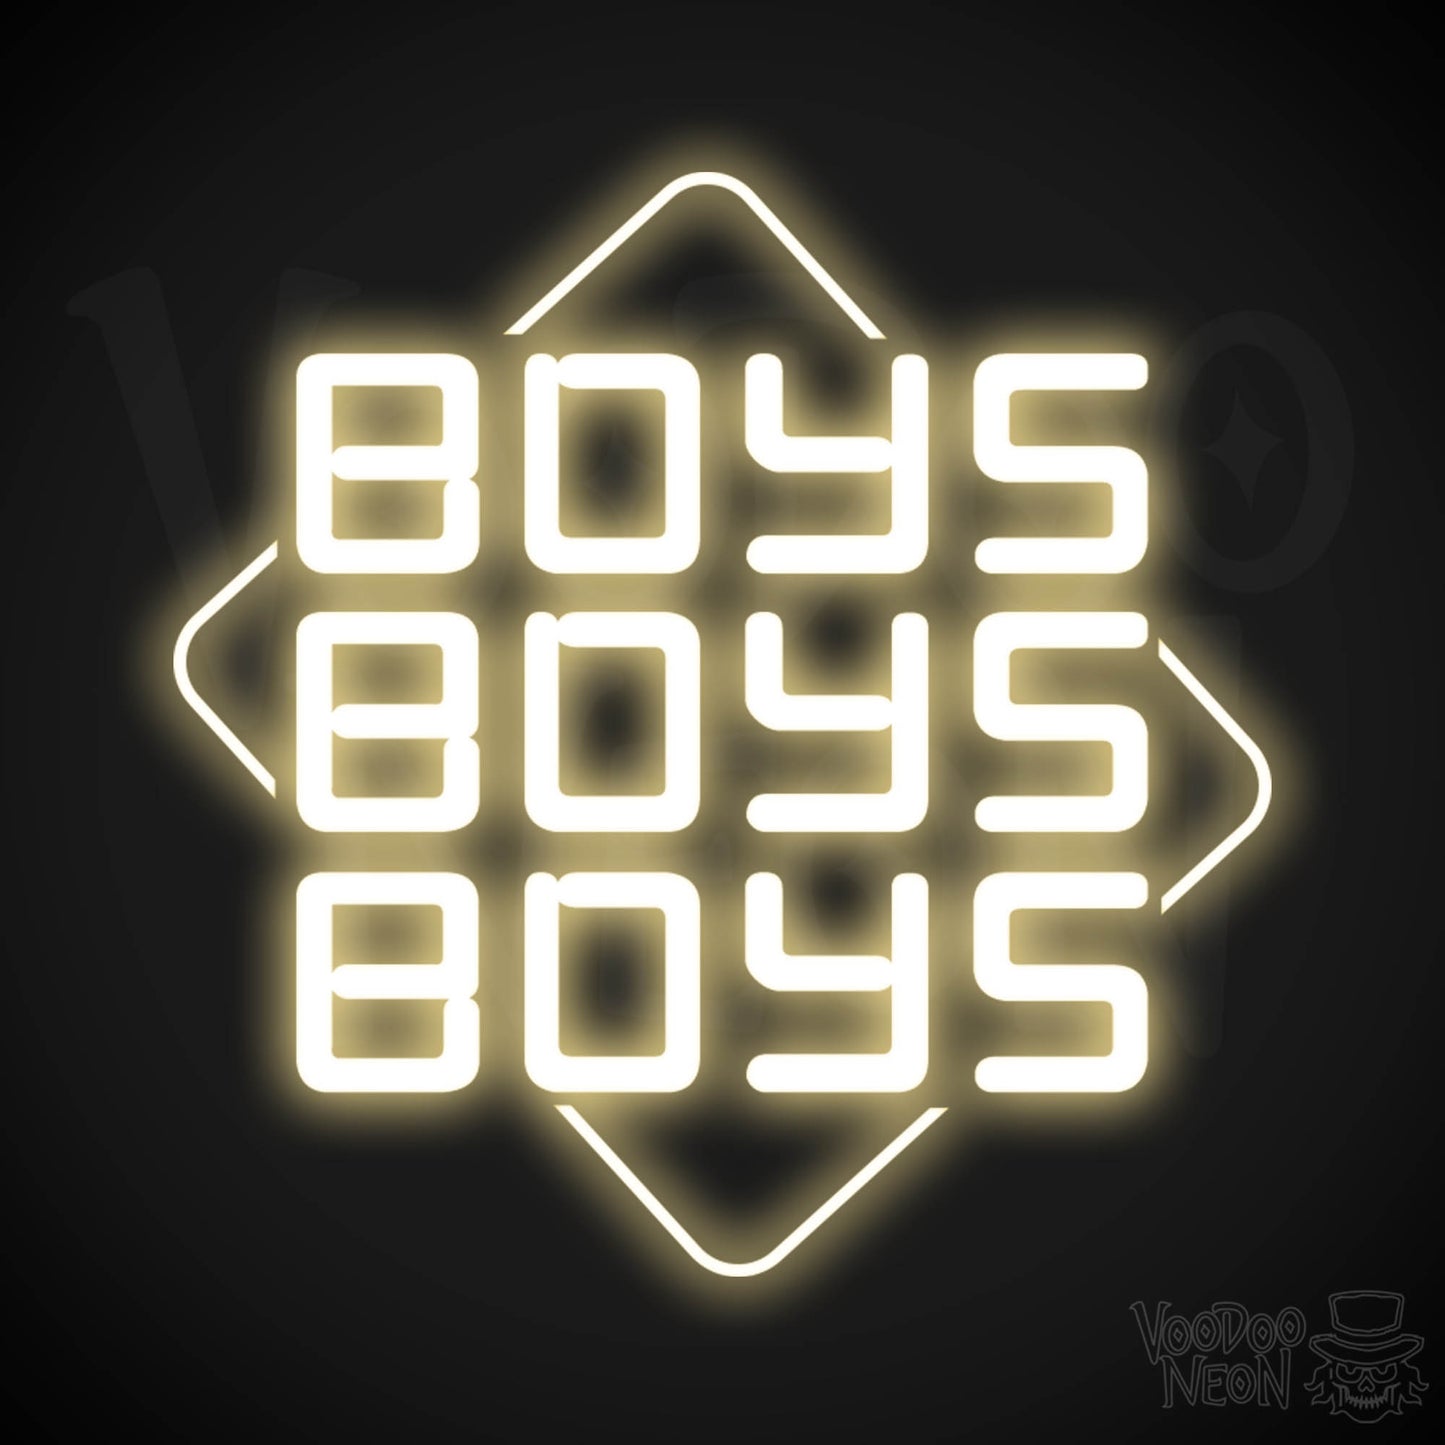 Boys Boys Boys Neon Sign - Neon Boys Boys Boys Sign - Neon Wall Art - Color Warm White